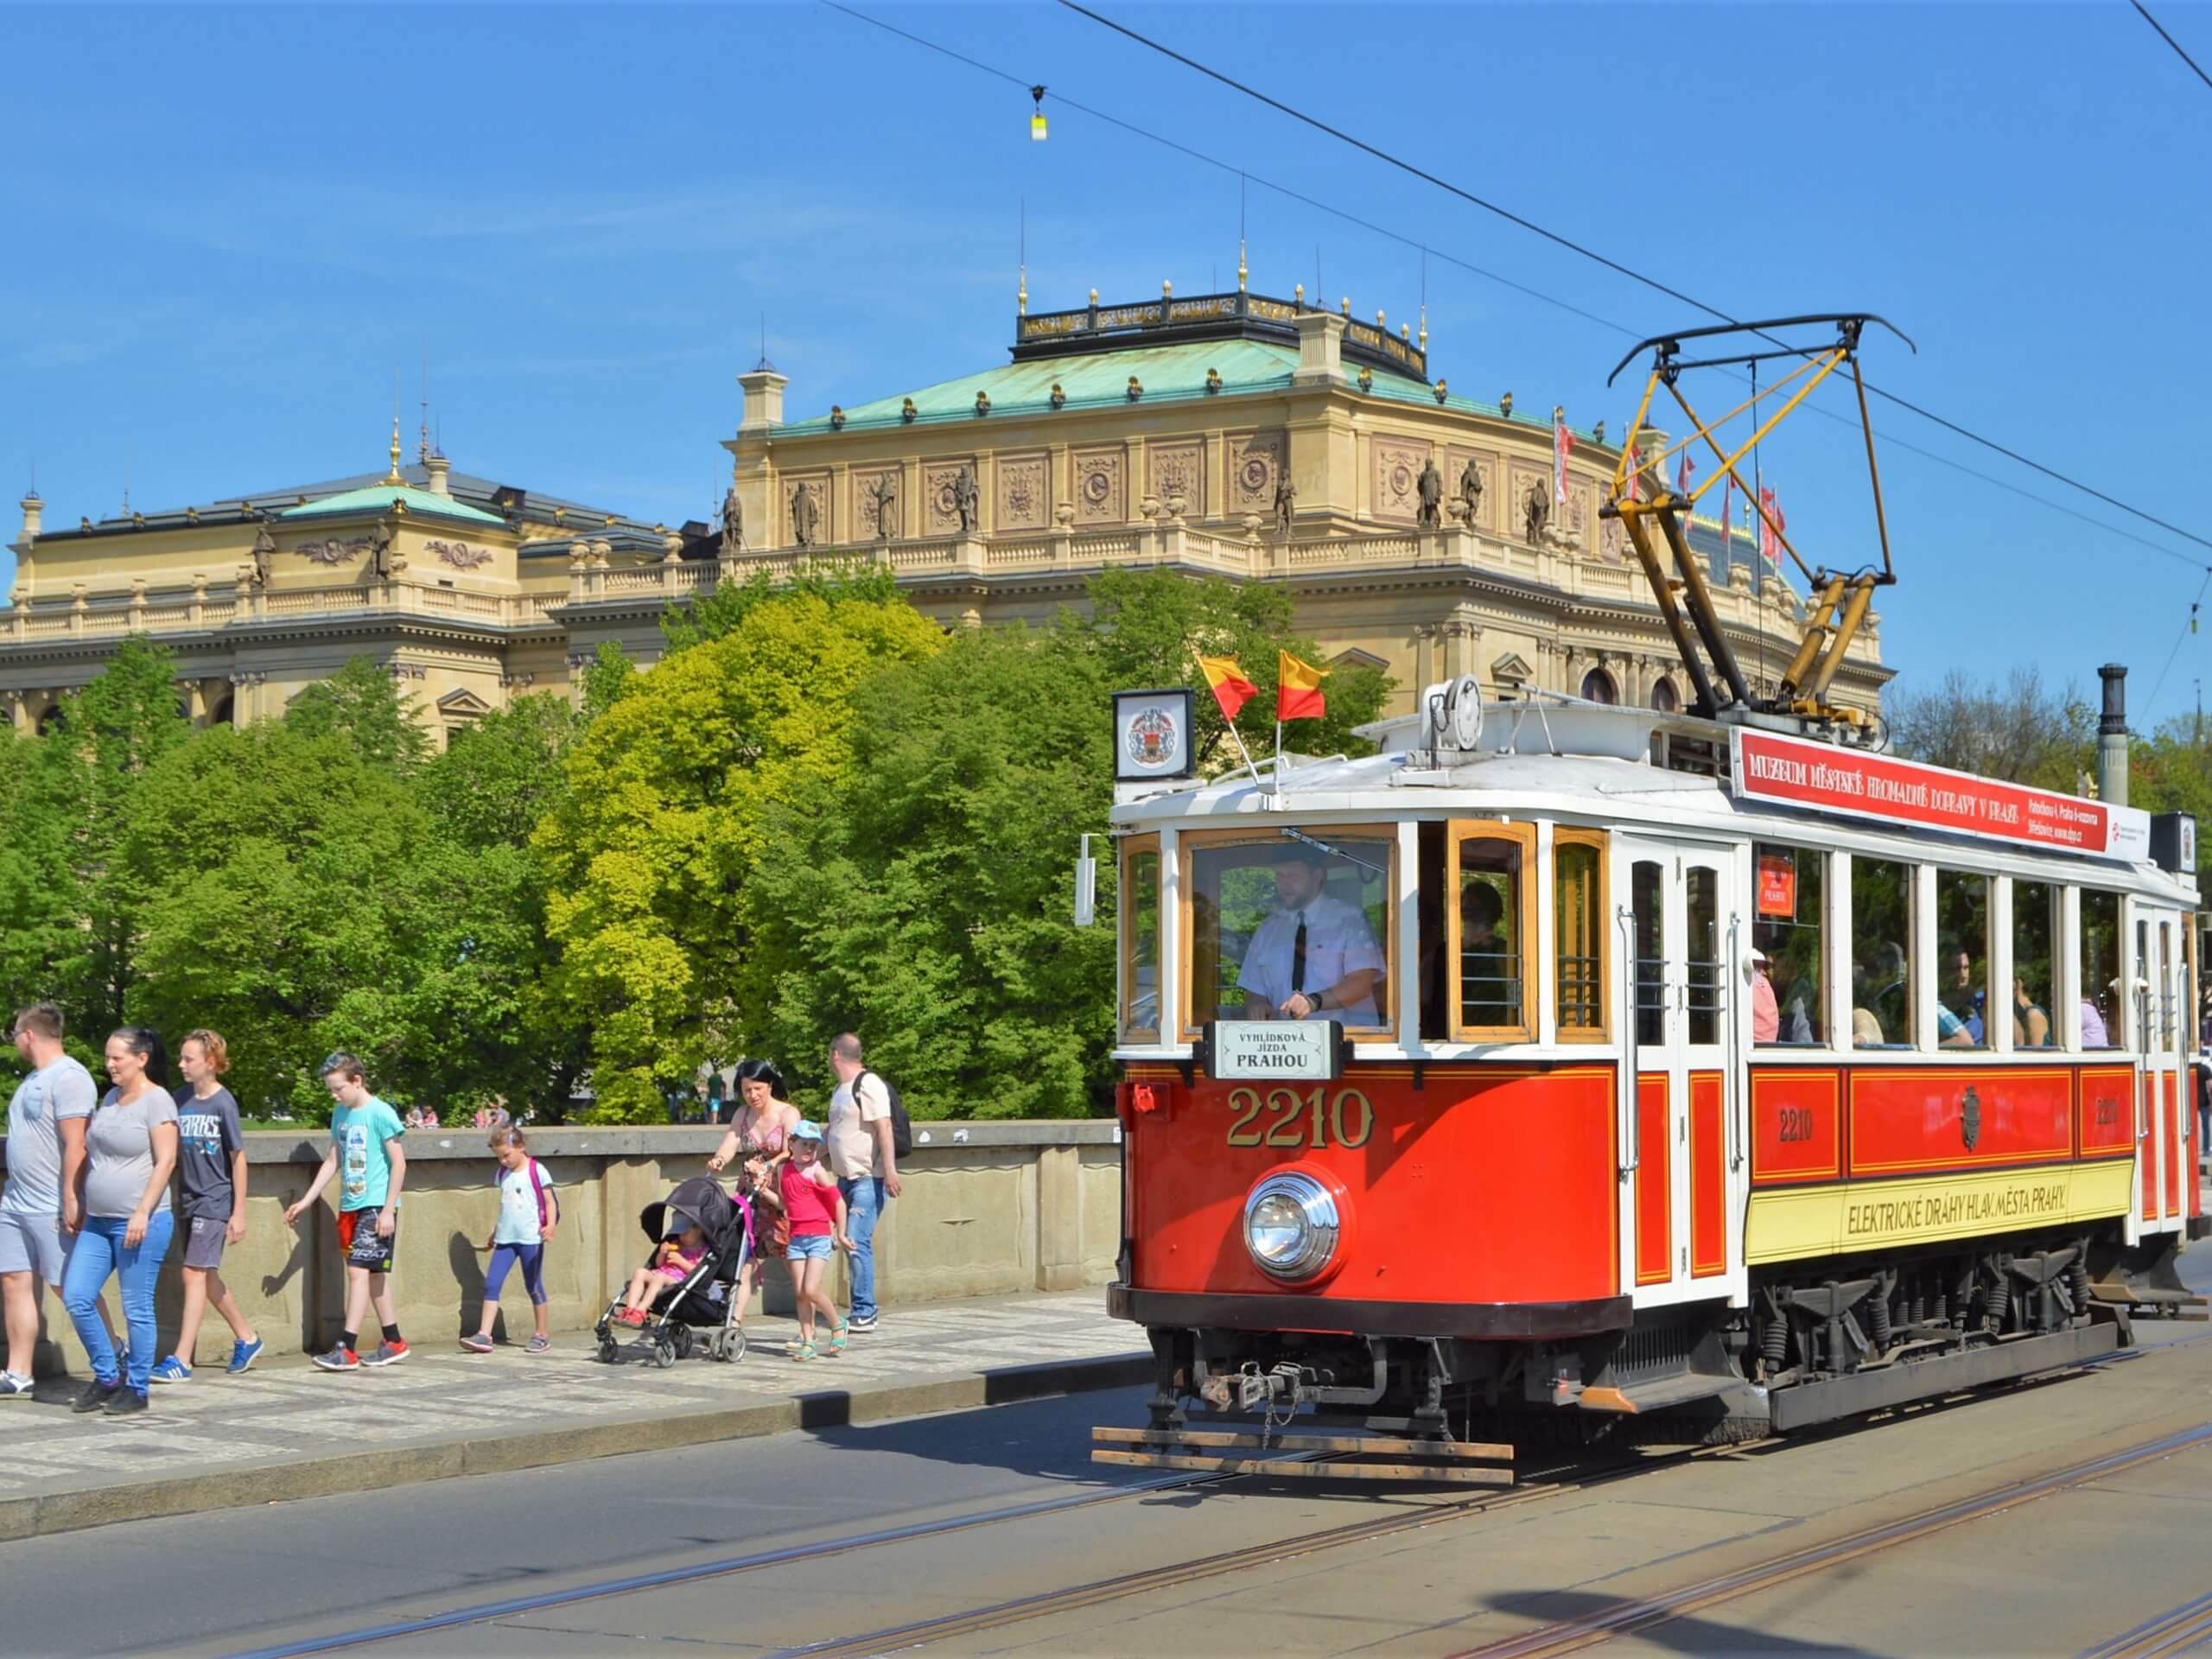 Historic tram in Prague centre